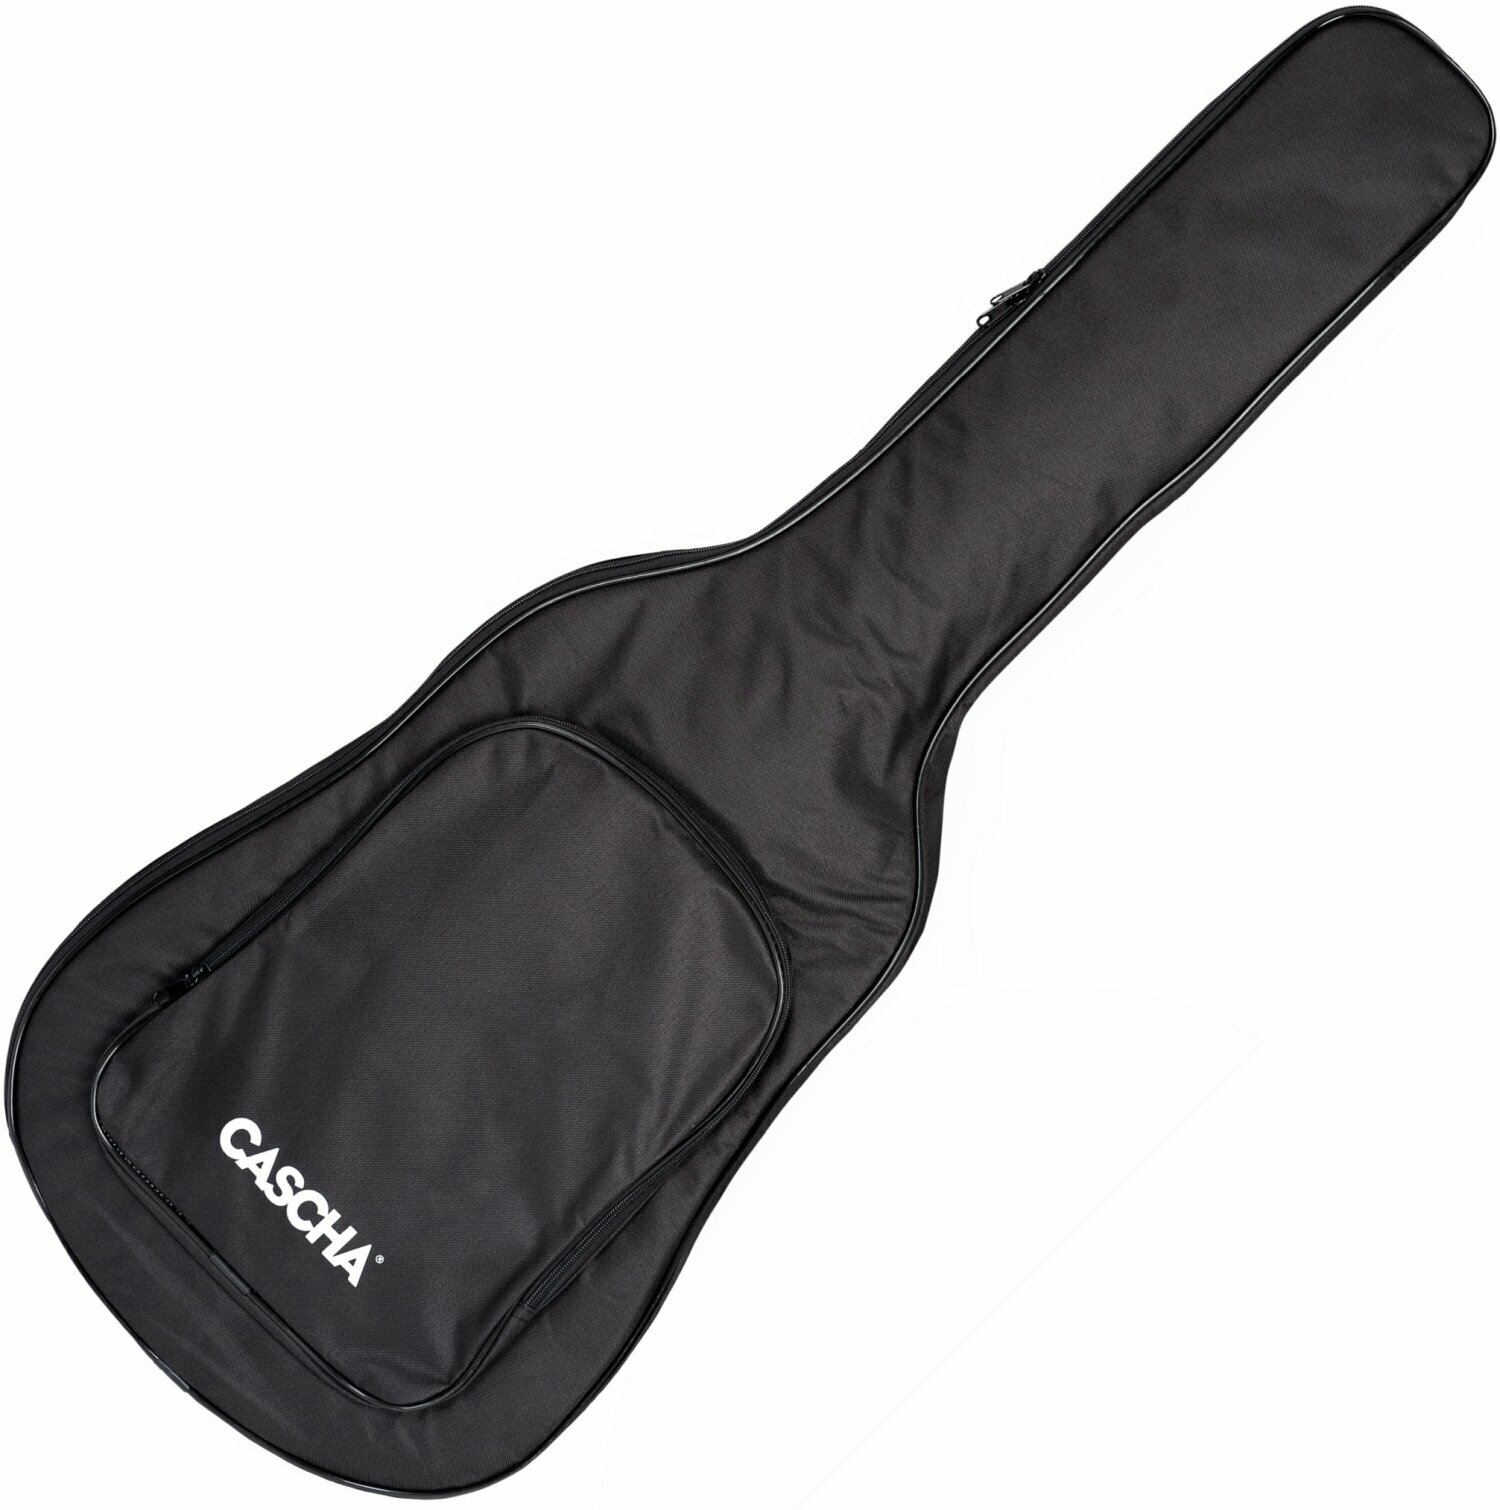 Cascha Acoustic Guitar Bag - Standard Pouzdro pro akustickou kytaru Cascha